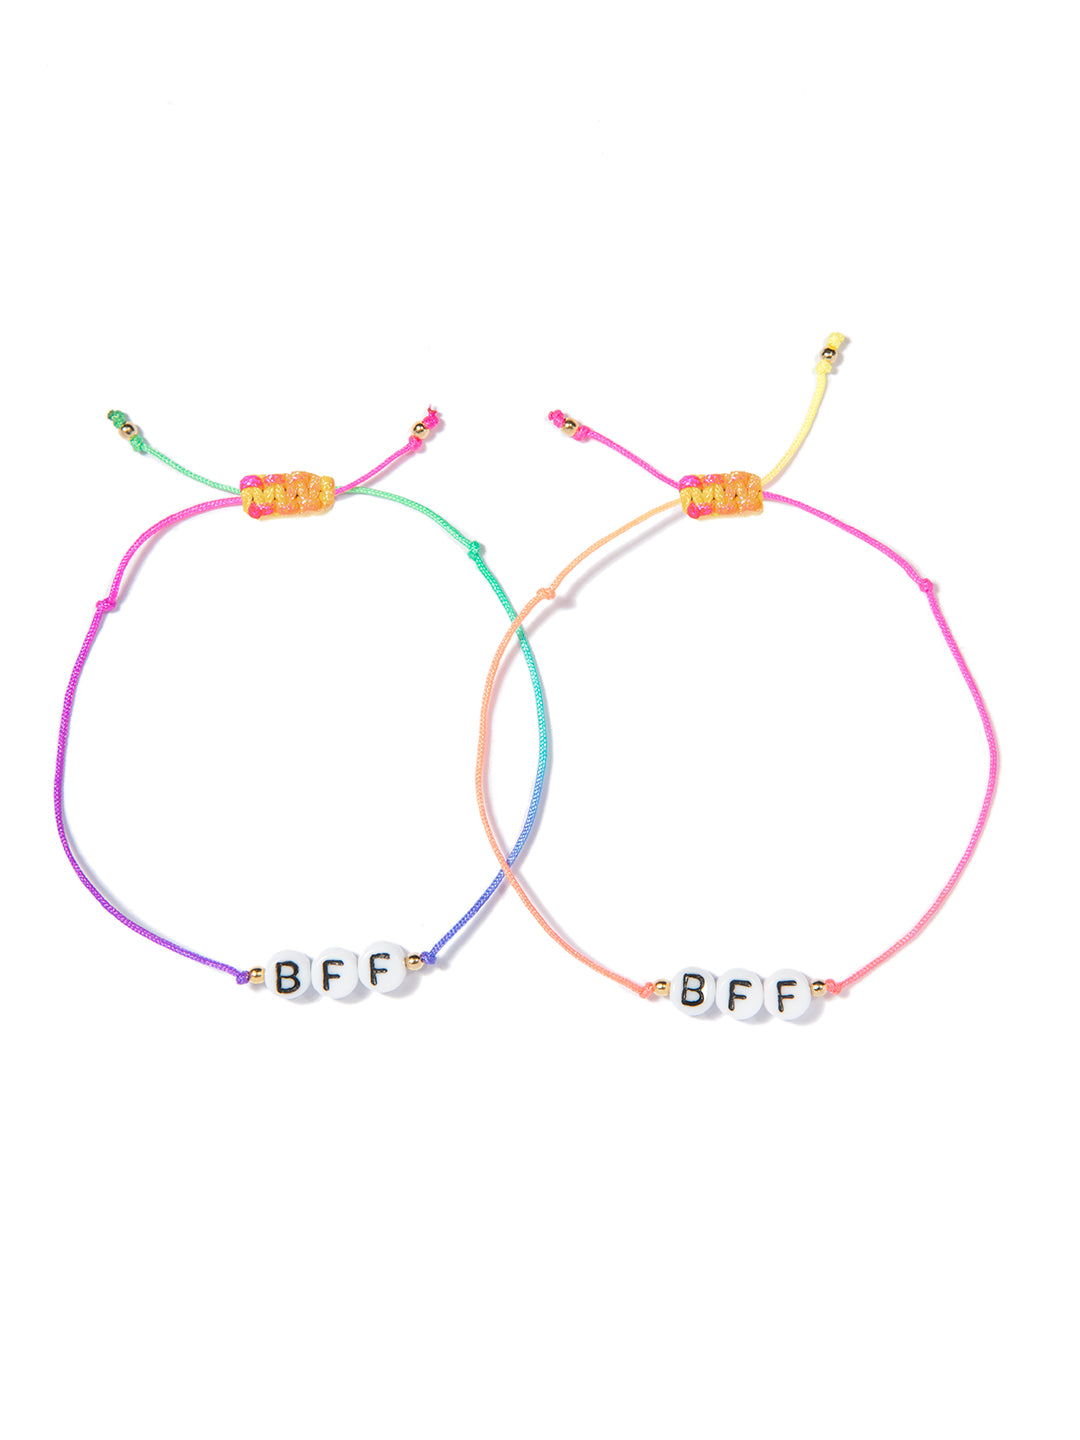 Bracelet - BFF - Bracelet Girls